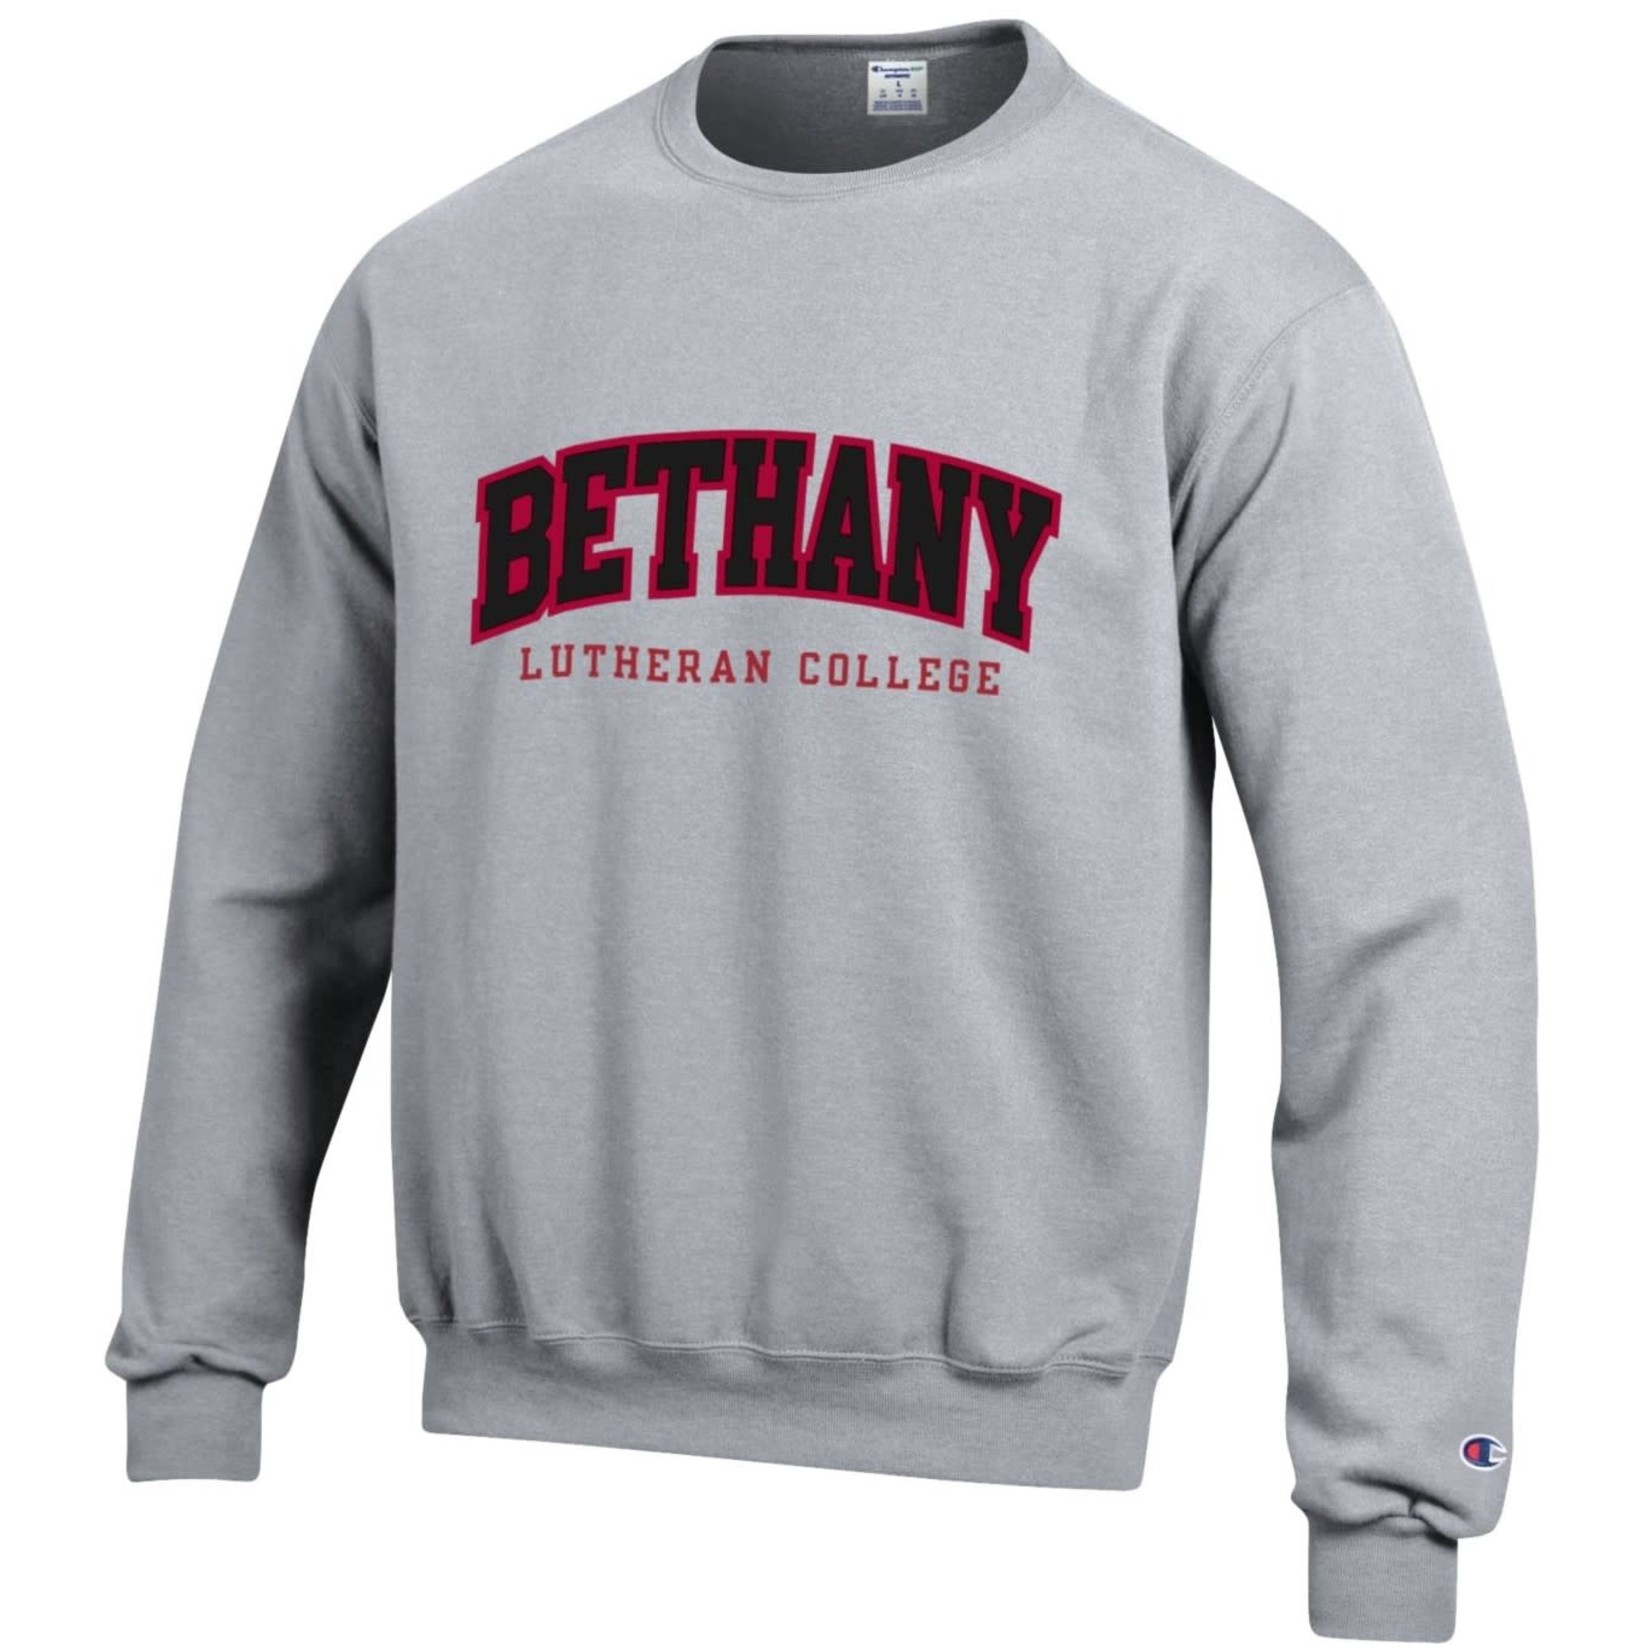 Champion Bethany Lutheran College Embroidered Crew Sweatshirt